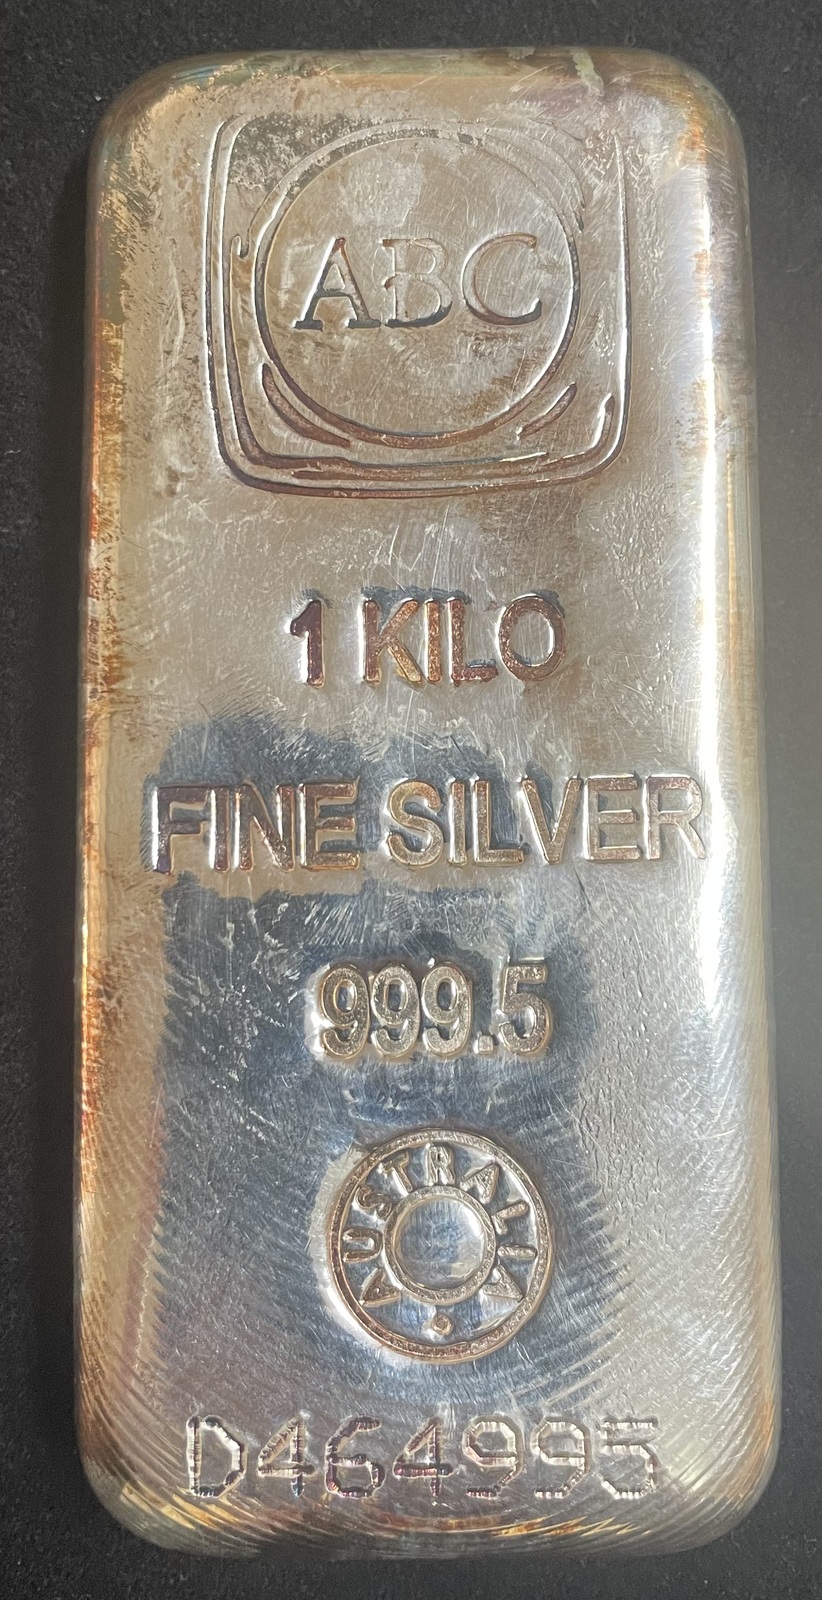 ABC Silver One Kilo Cast Ingot 99.95% product image